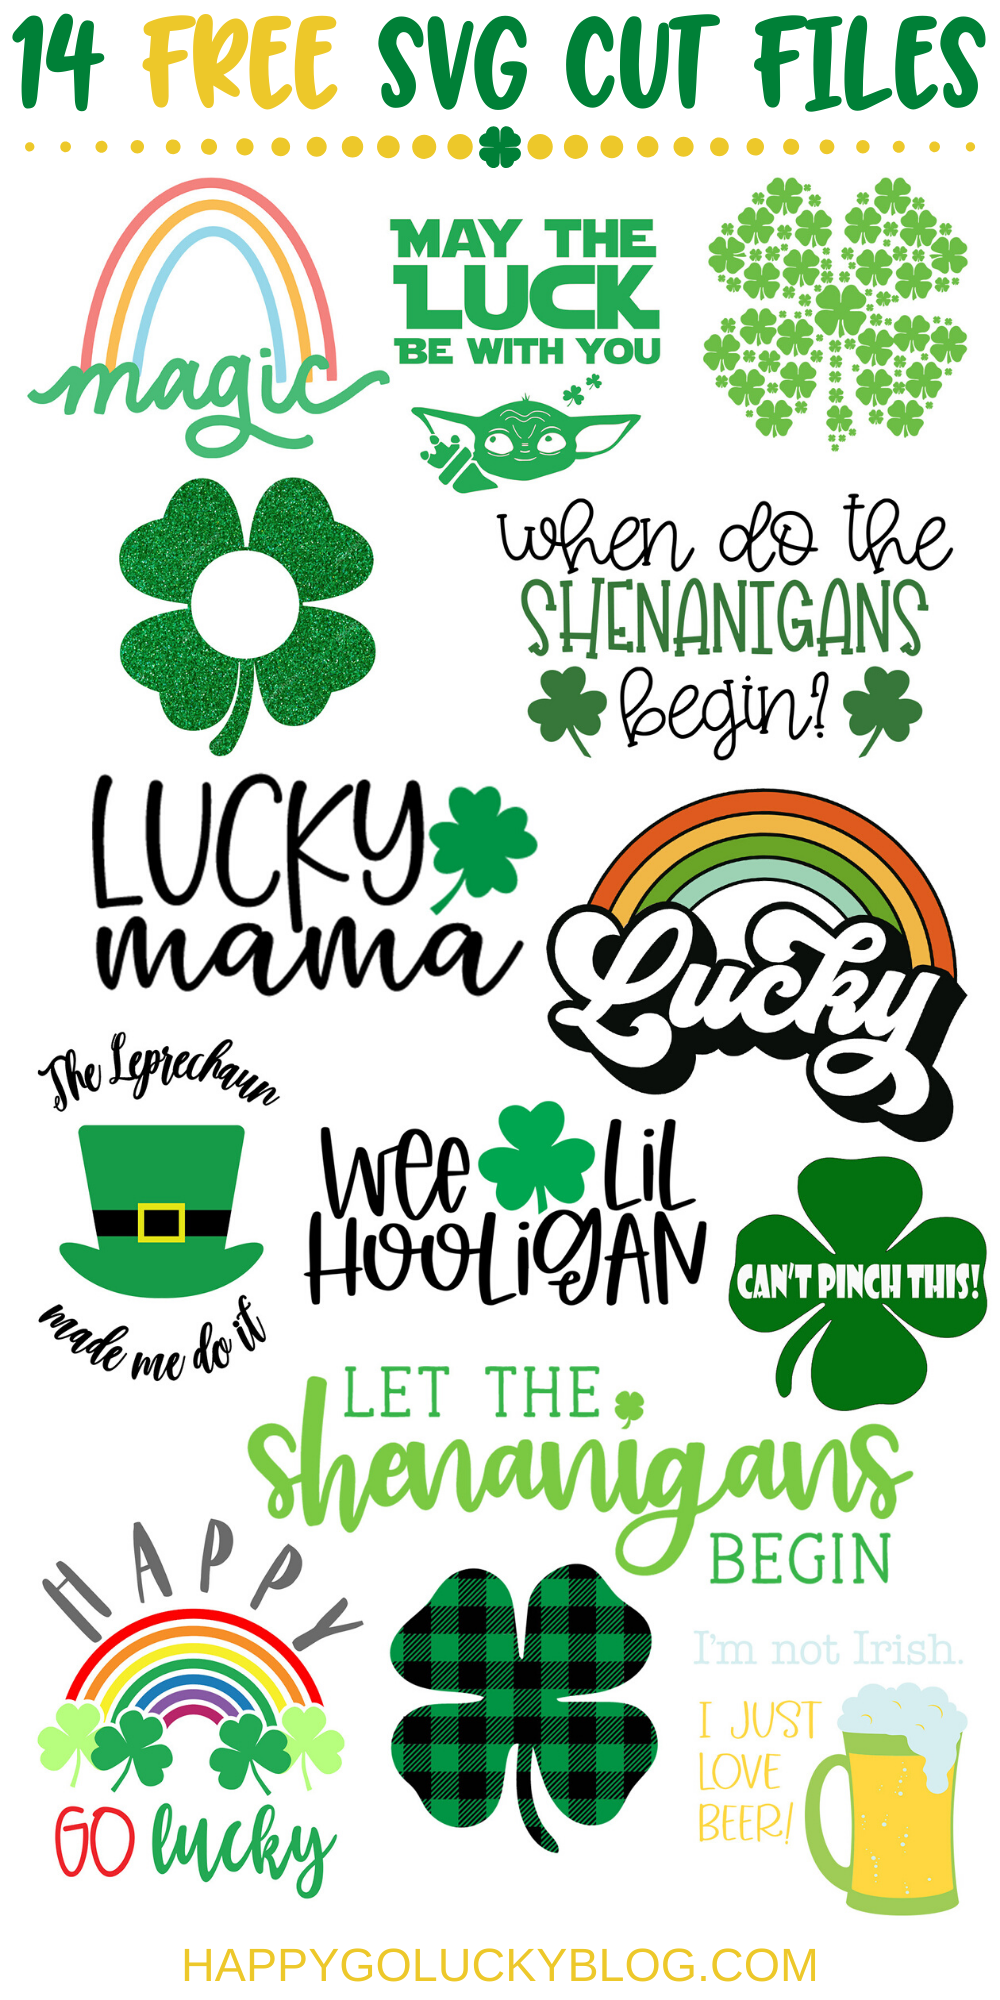 14 Free St. Patrick's Day Free SVG Cut Files